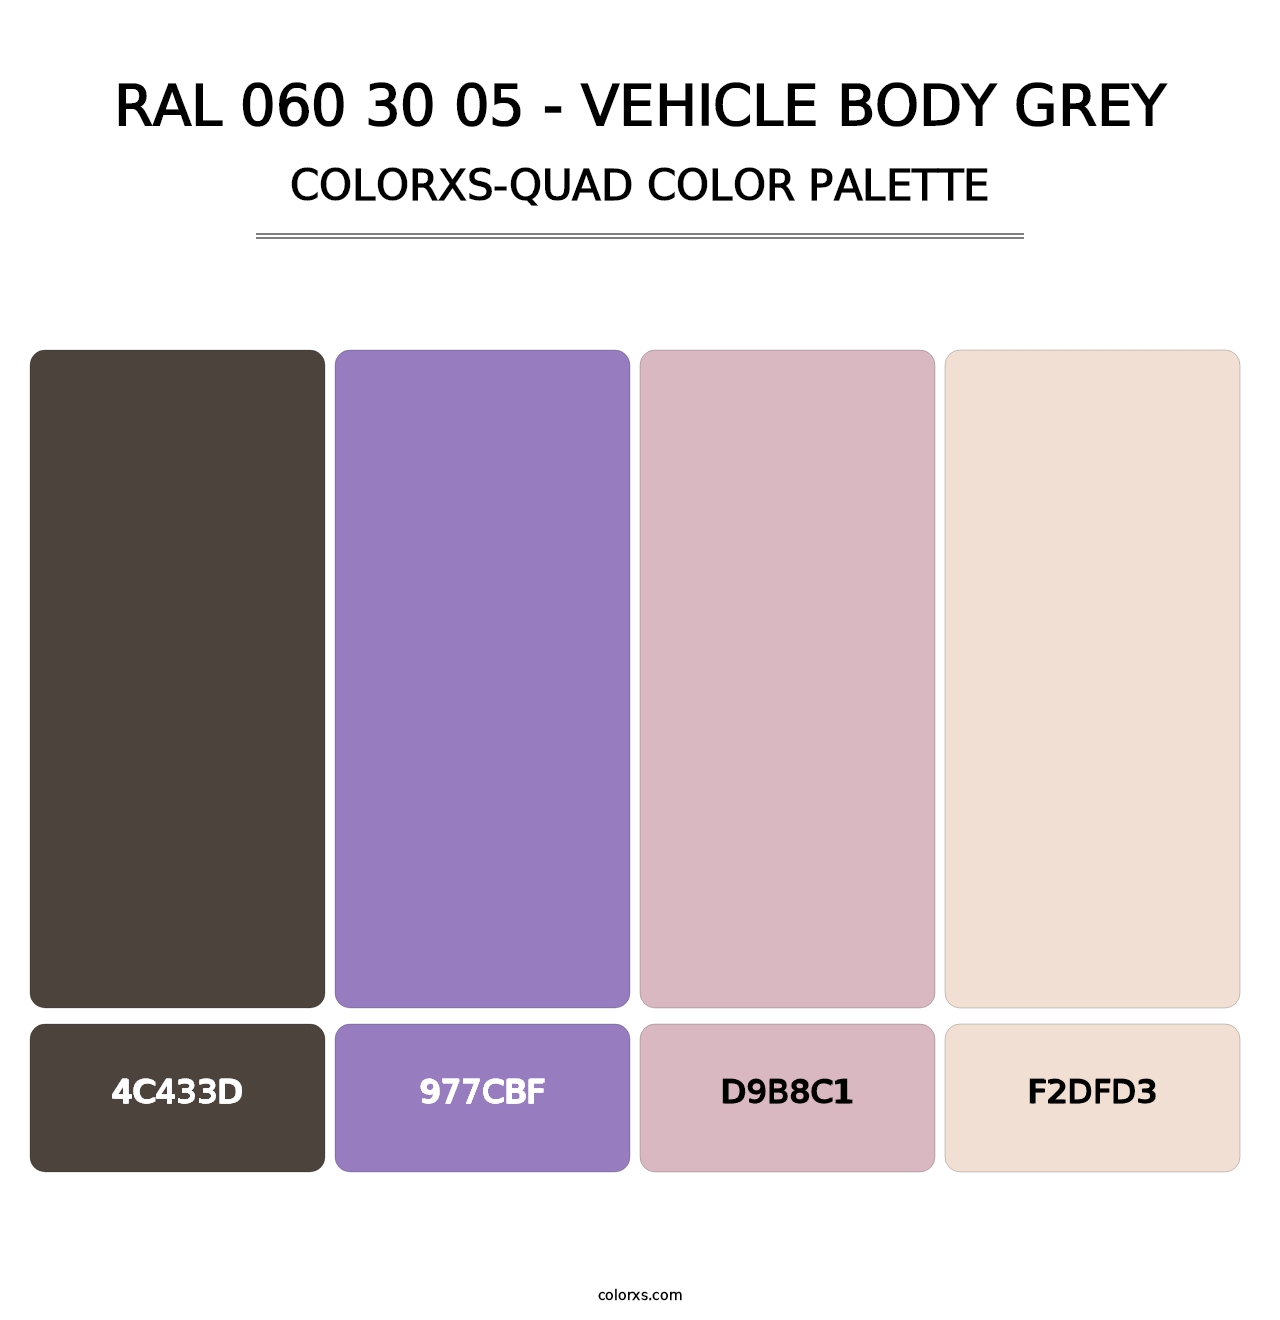 RAL 060 30 05 - Vehicle Body Grey - Colorxs Quad Palette